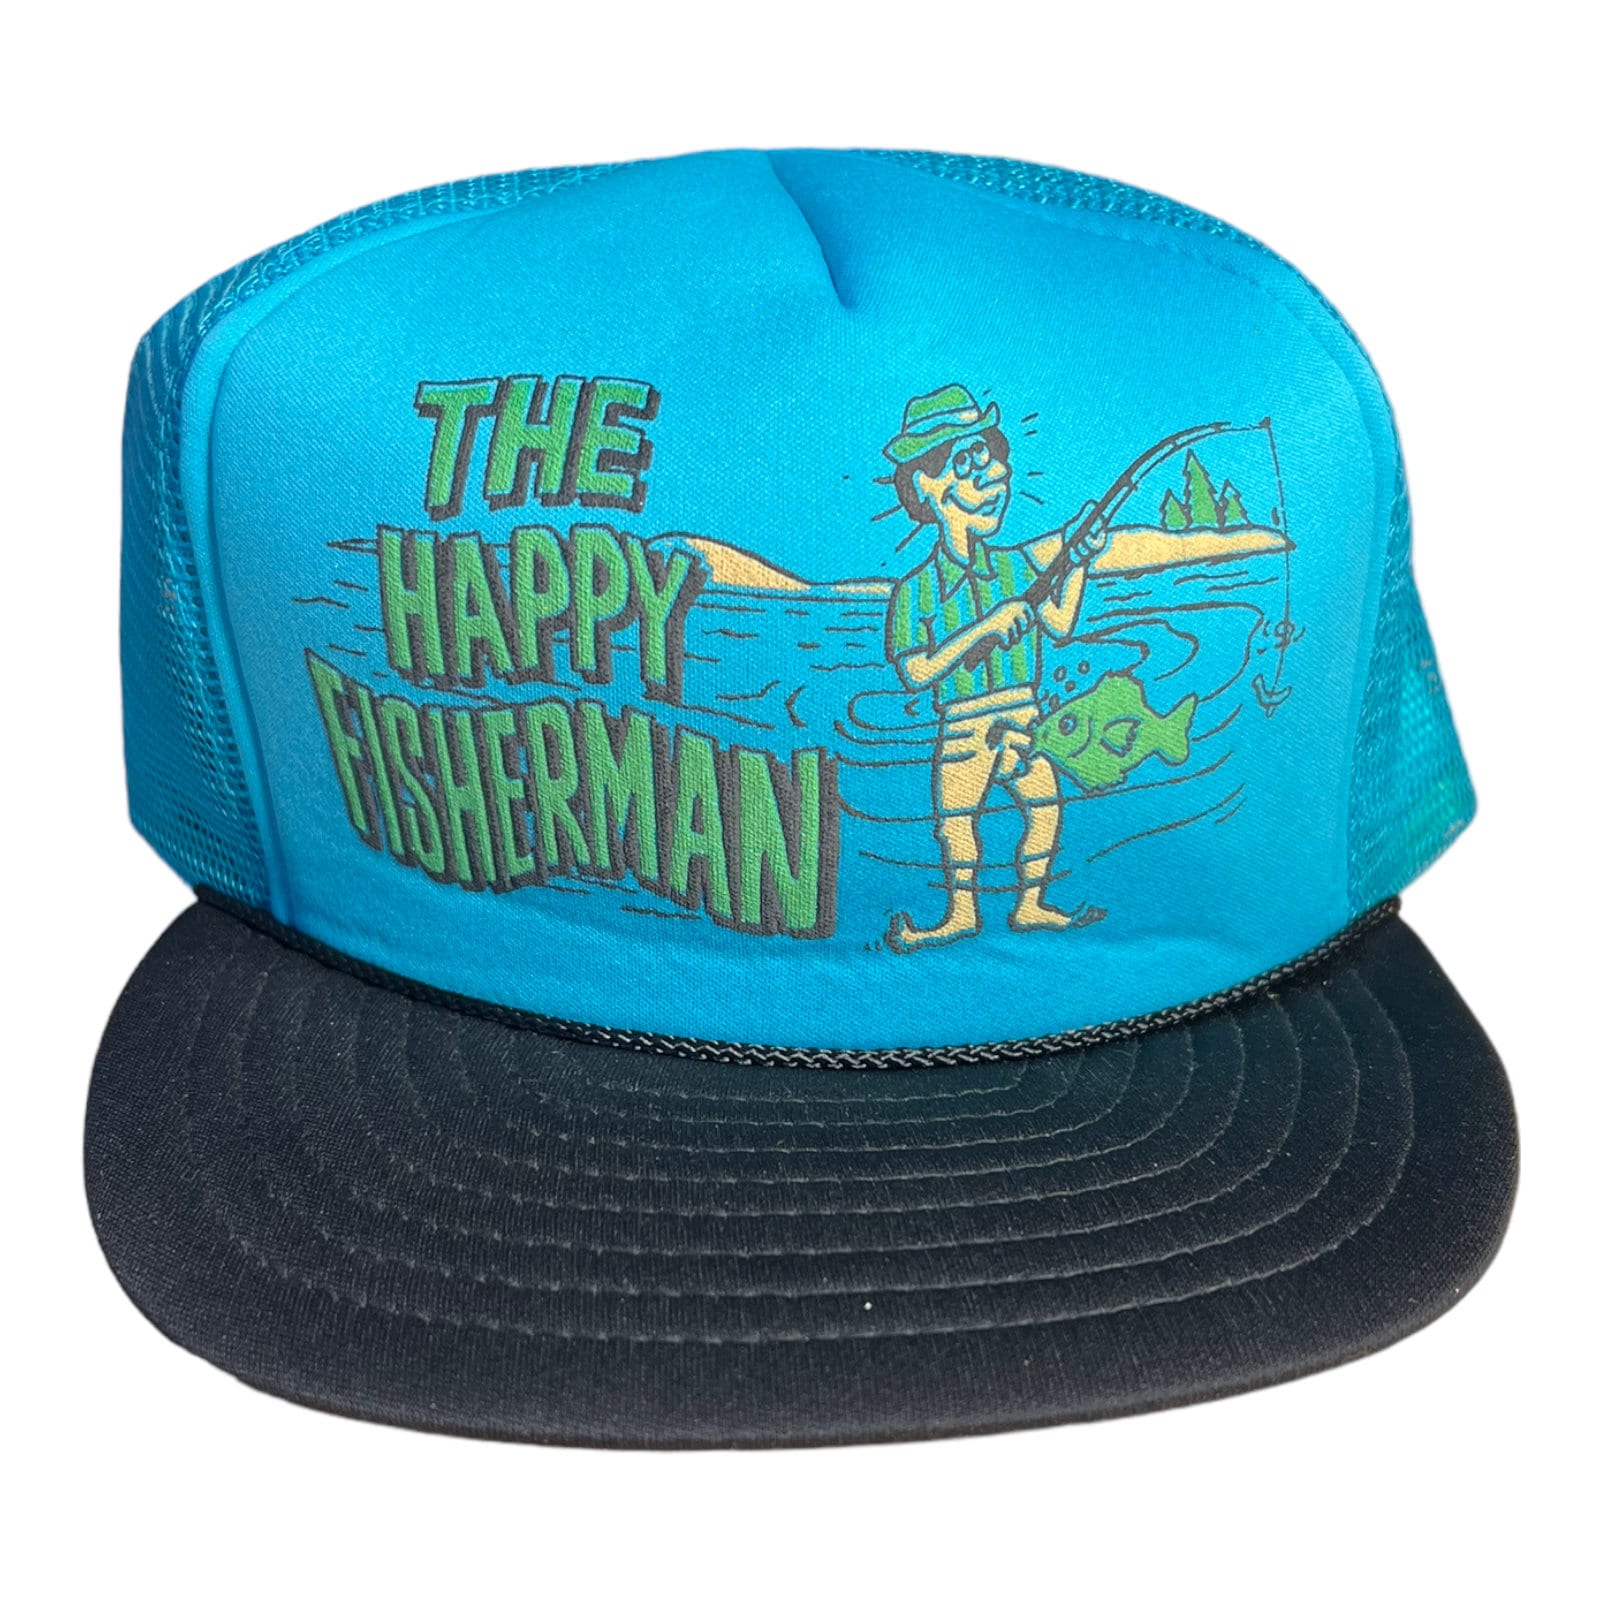 Vintage Fishing hat // The Happy fisherman funny trucker hat // vintage  trucker hat // fish boating boat snapback cap // deadstock nos